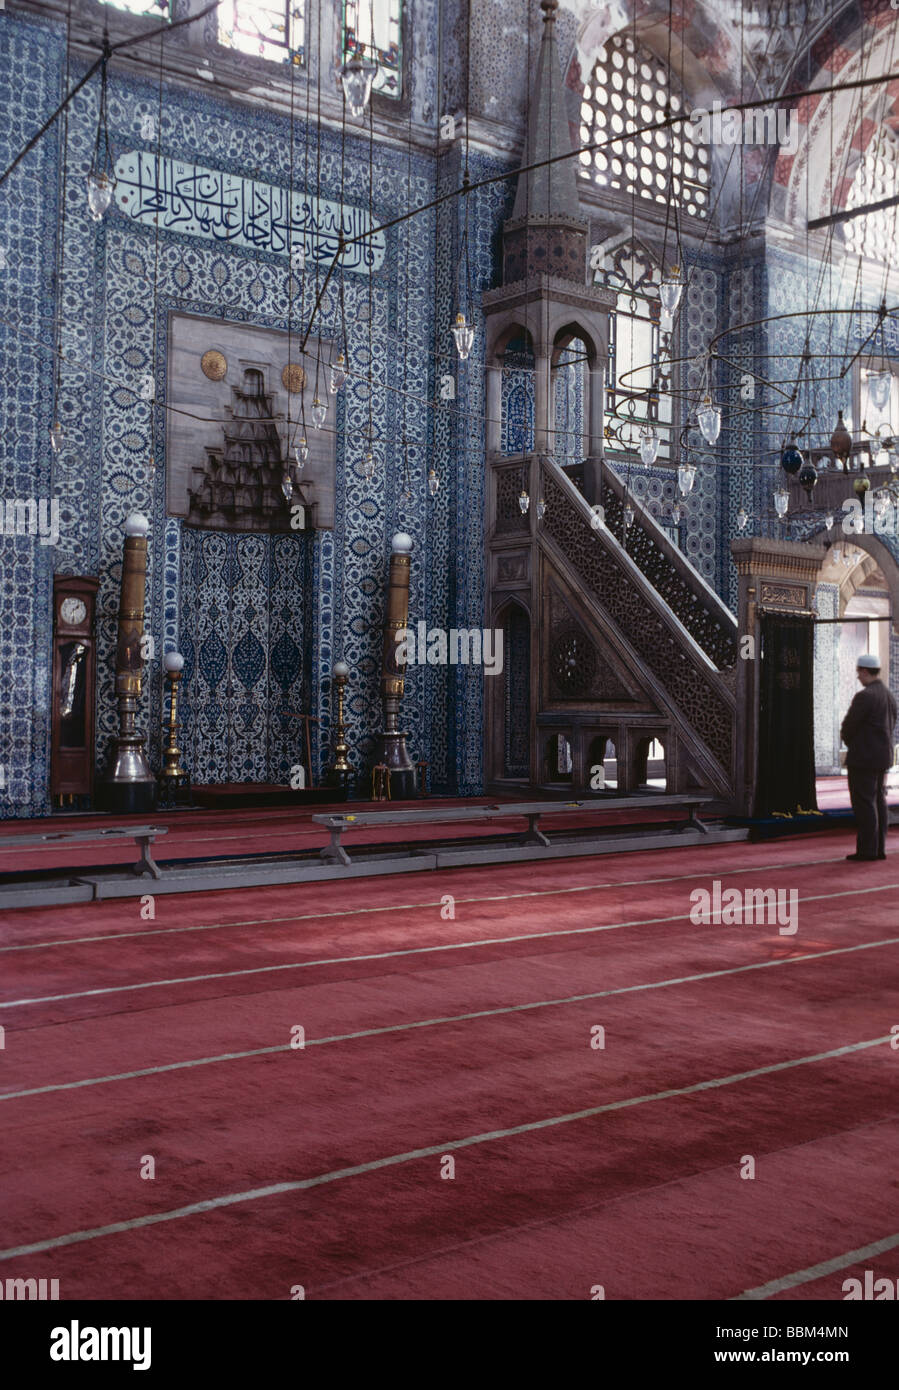 Uomo che prega davanti al Mithrab e Mimber di Rüstem Paşa Camii Sinan 1550 İstanbul Turchia 690515 018 Foto Stock